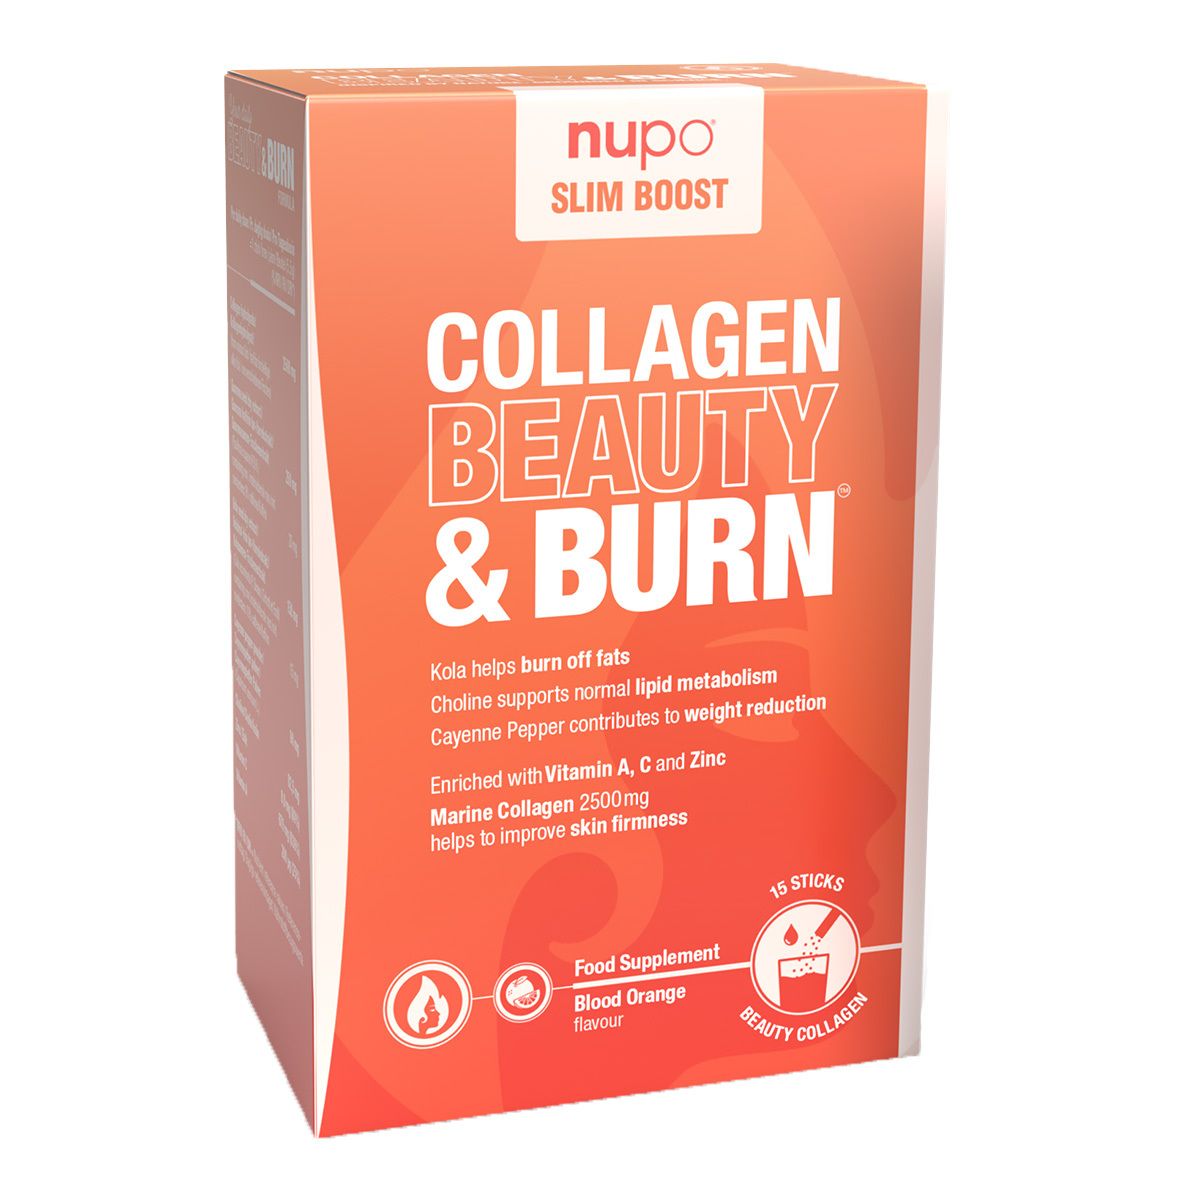 Nupo Slim Boost Collagen Beauty & Burn - 15 sticks